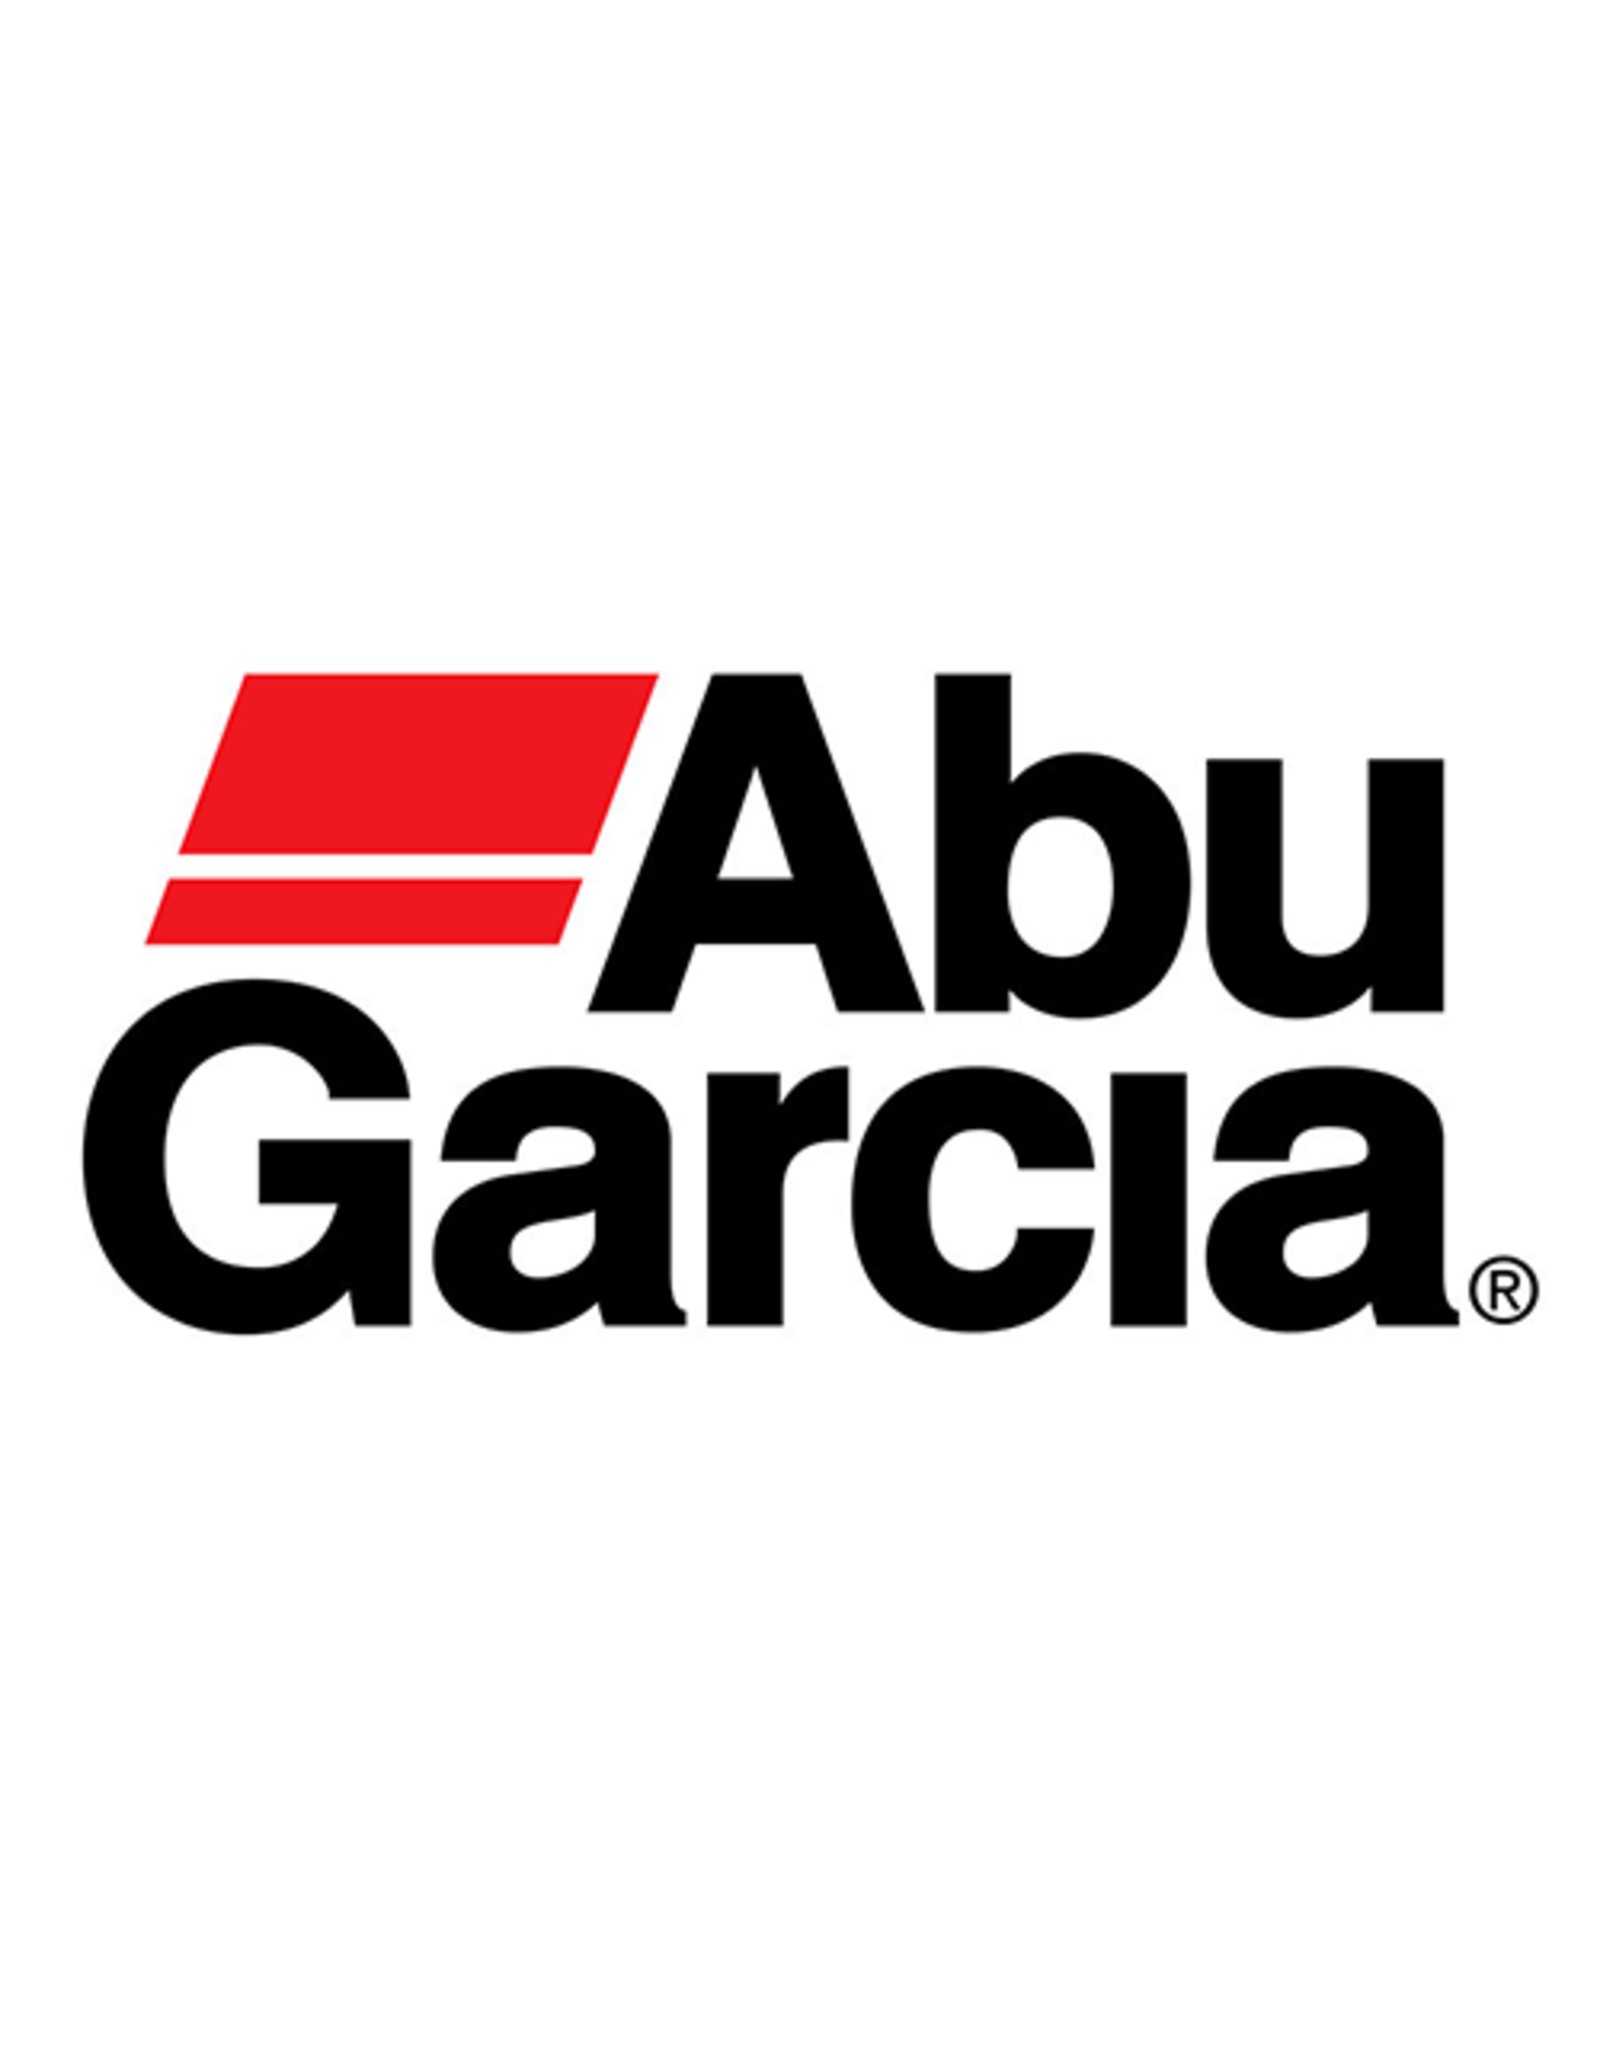 Abu Garcia 14691  BOSS CAP